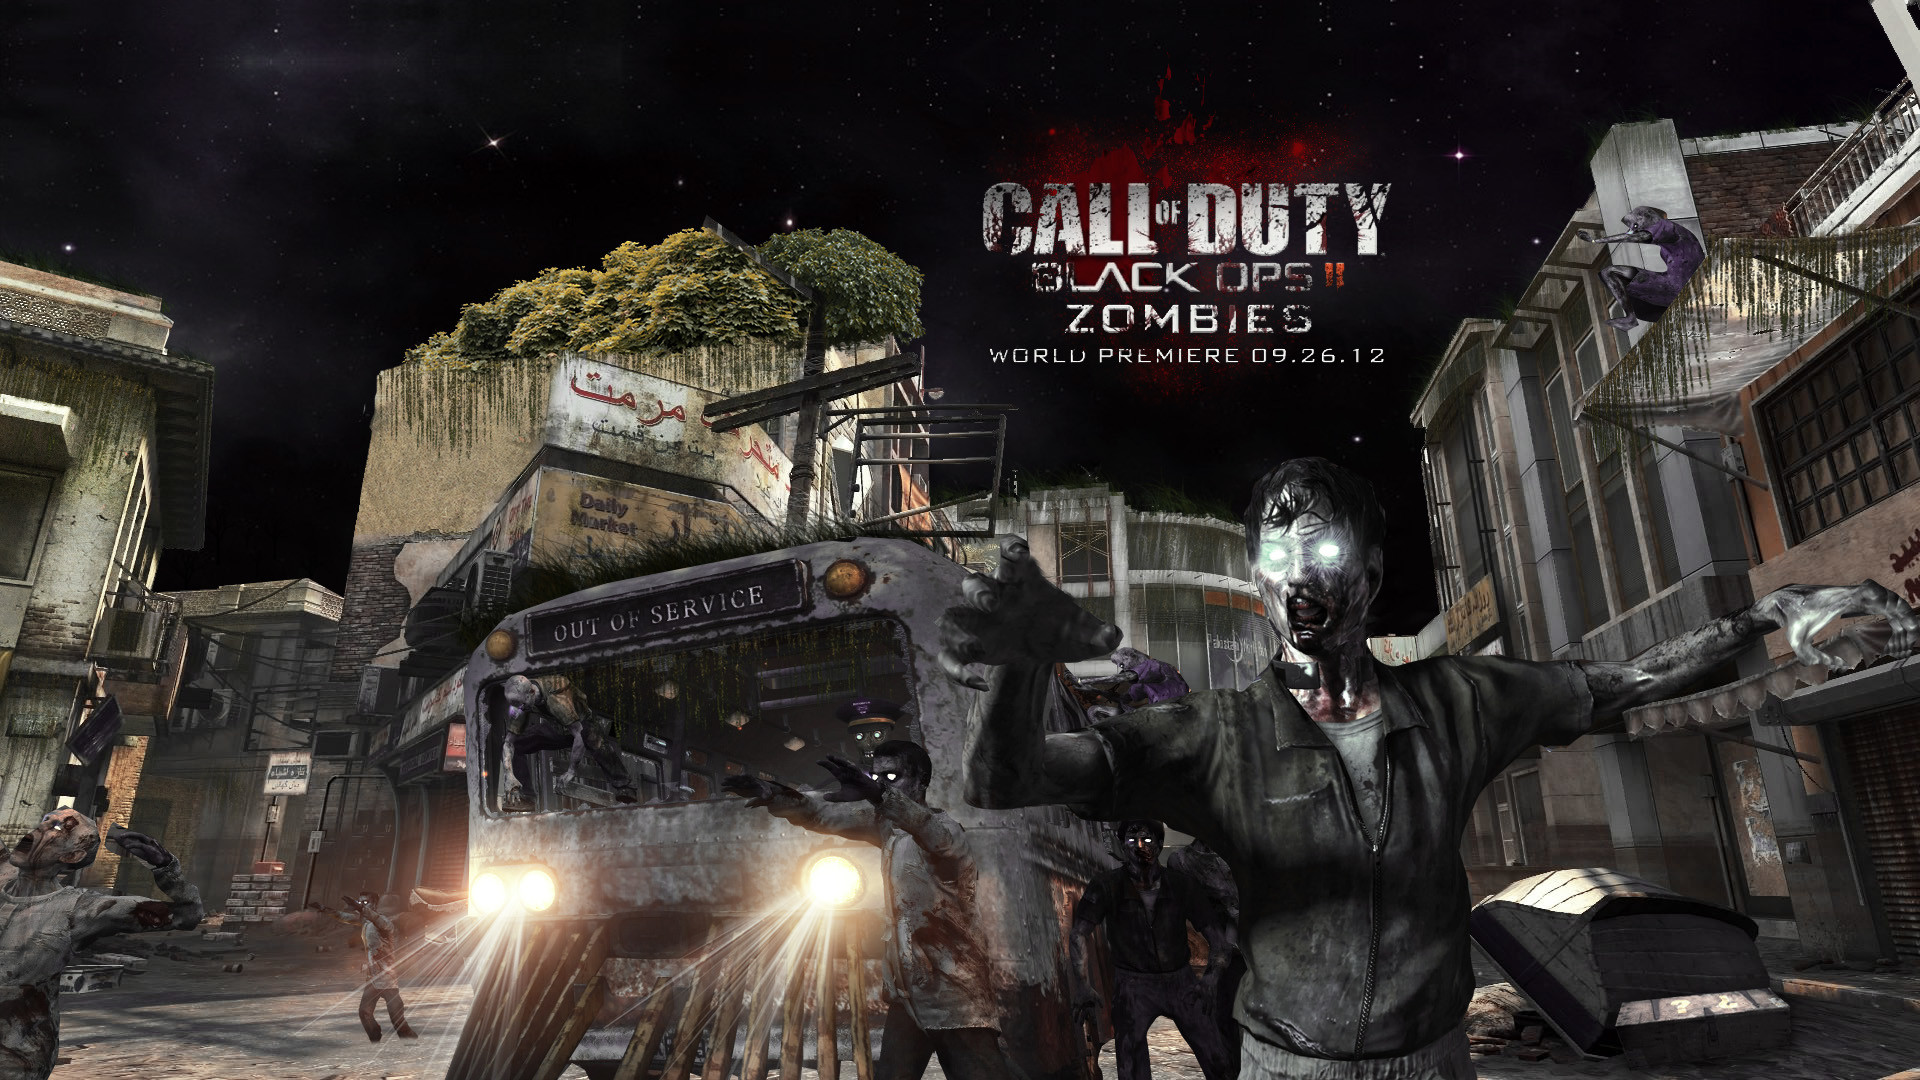  Black  Ops  Zombies  Wallpaper  1080p   WallpaperTag